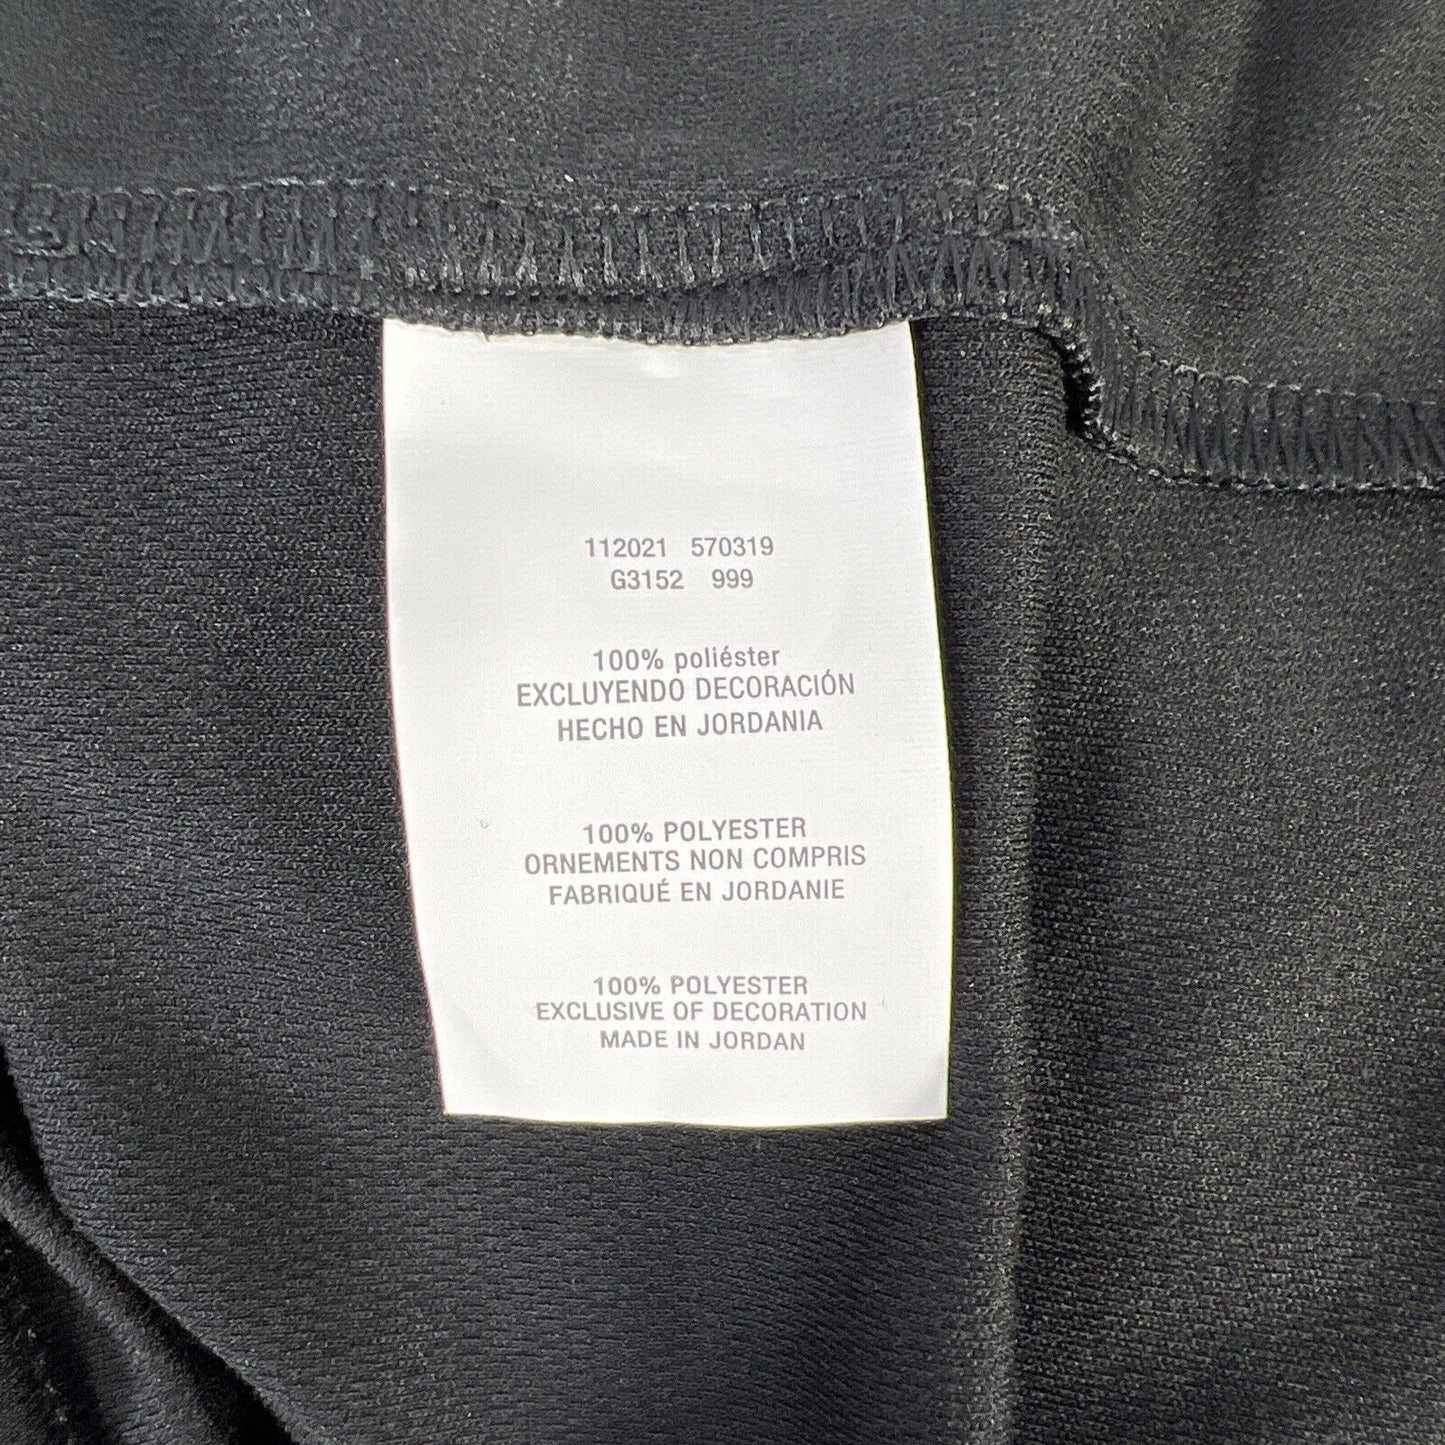 NEW Gear Men's Black Ohio State Dad 1/4 Zip Pullover Shirt - L